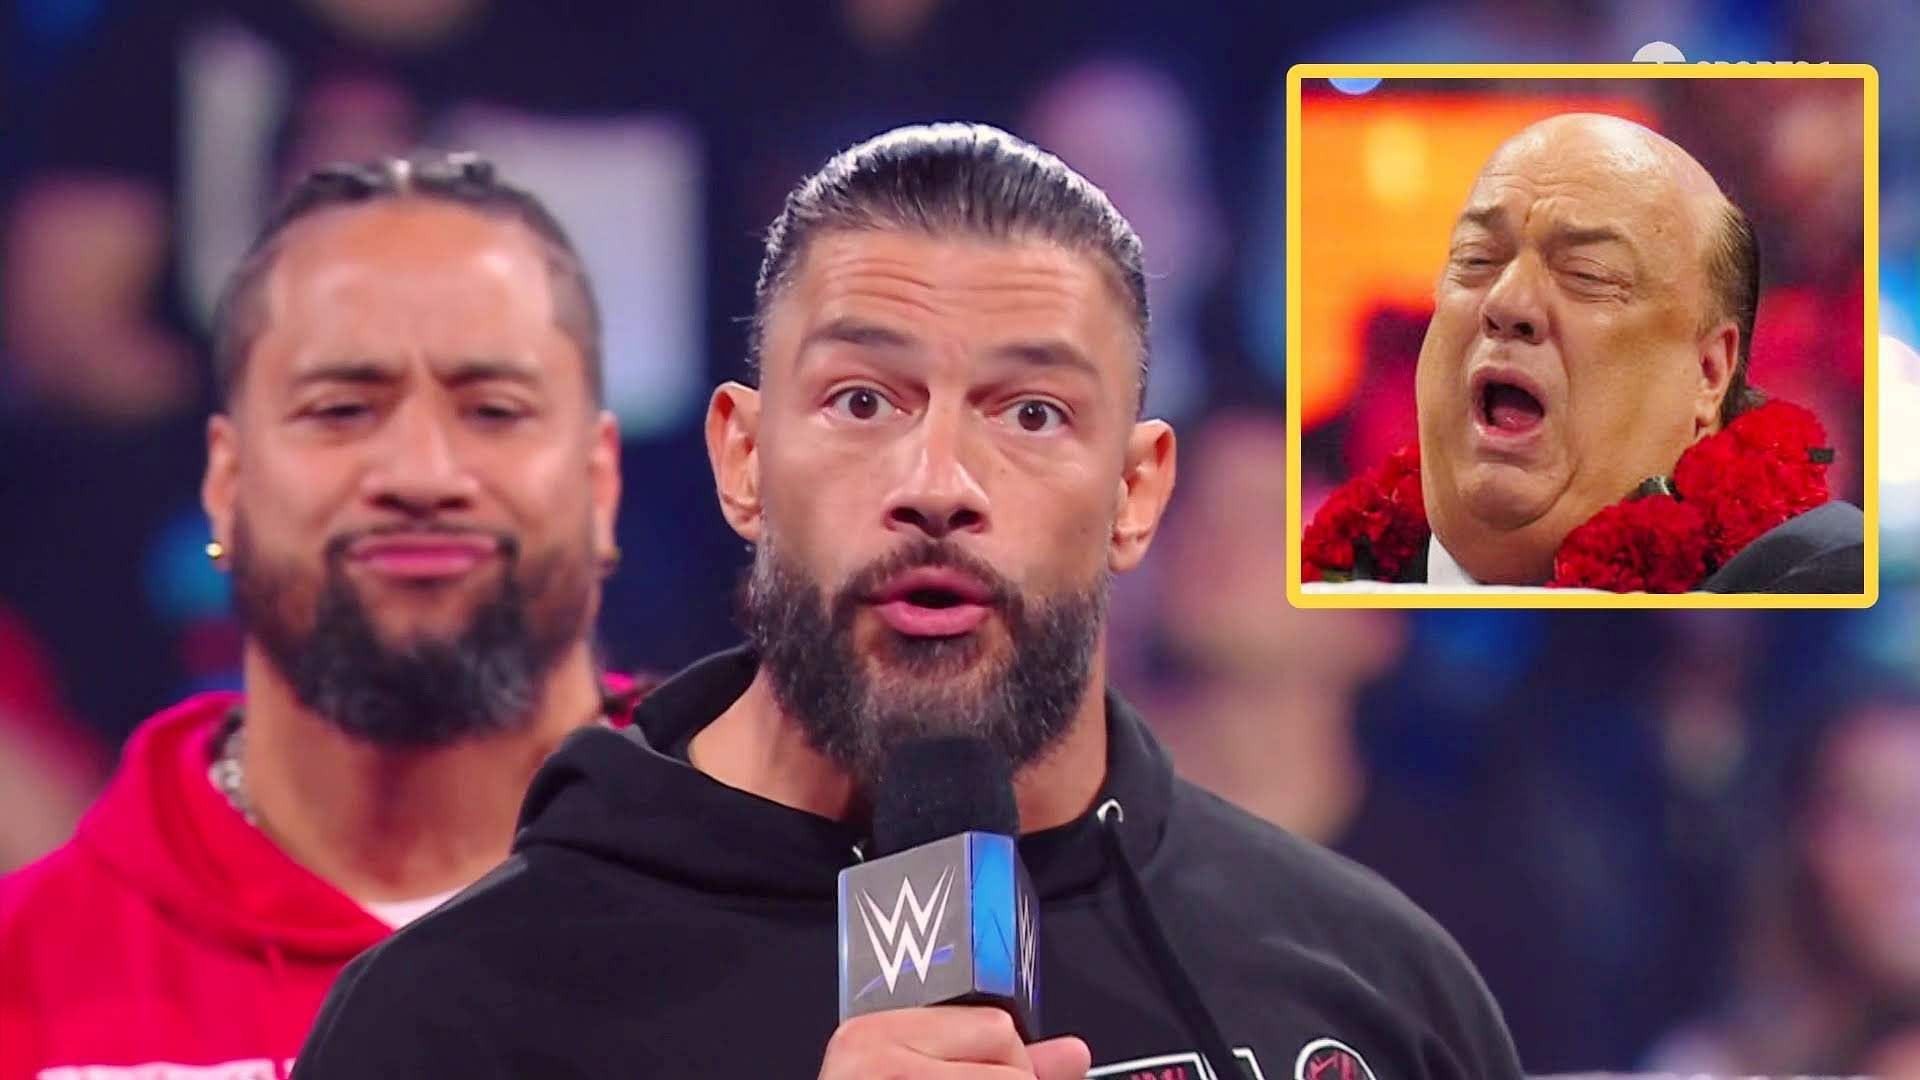 WWE SmackDown stars Jimmy Uso, Roman Reigns, and Paul Heyman